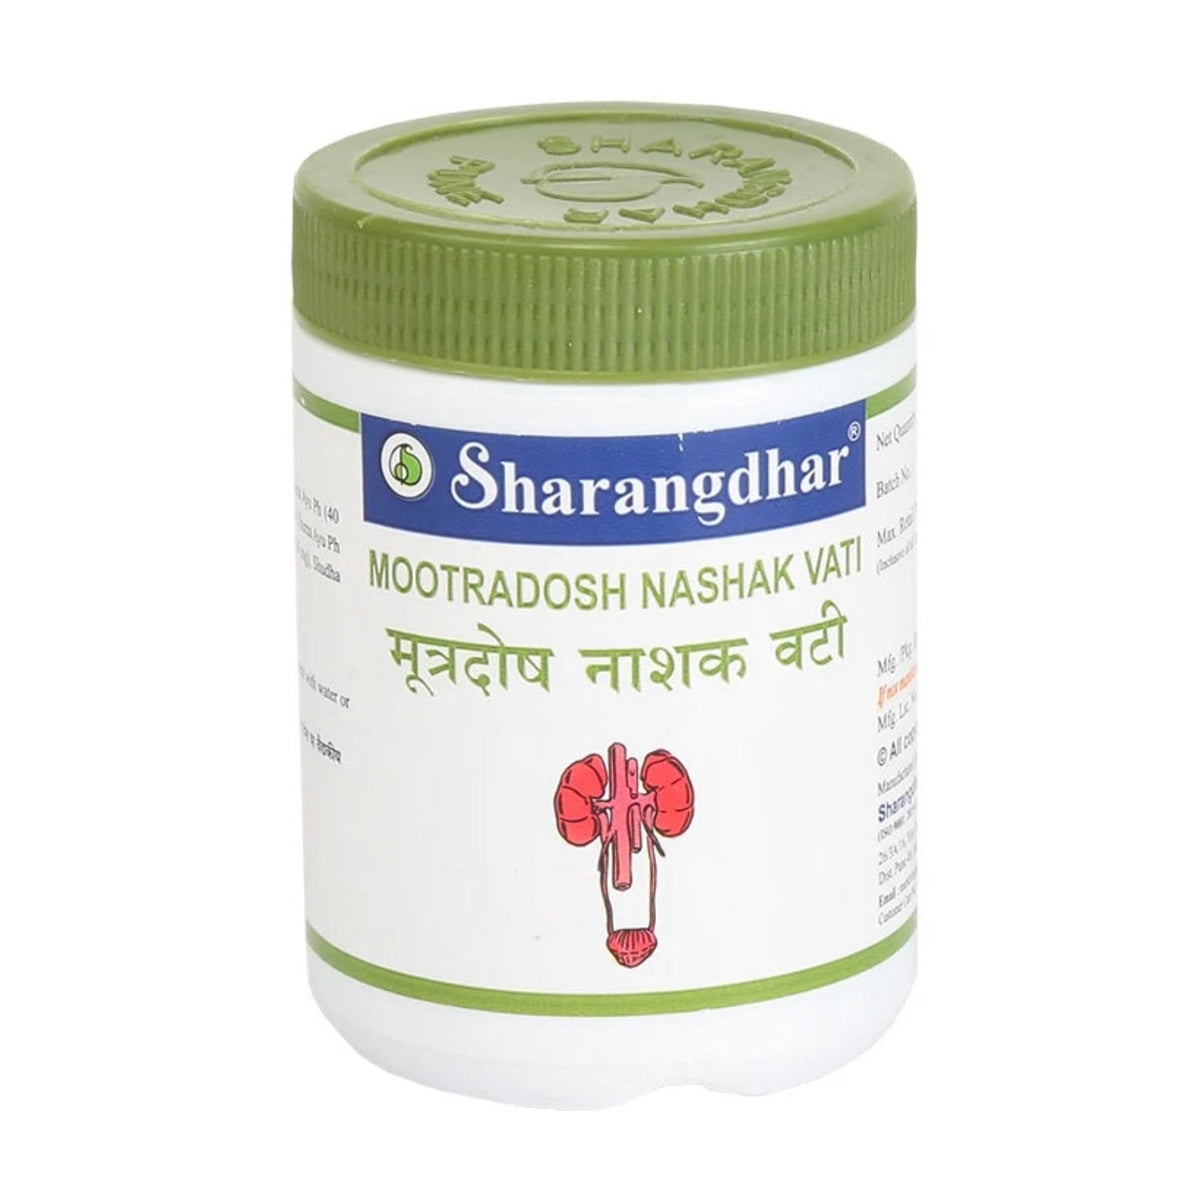 Sharangdhar Ayurvedic Mootradosh Nashak Vati Solution For Urine Problems